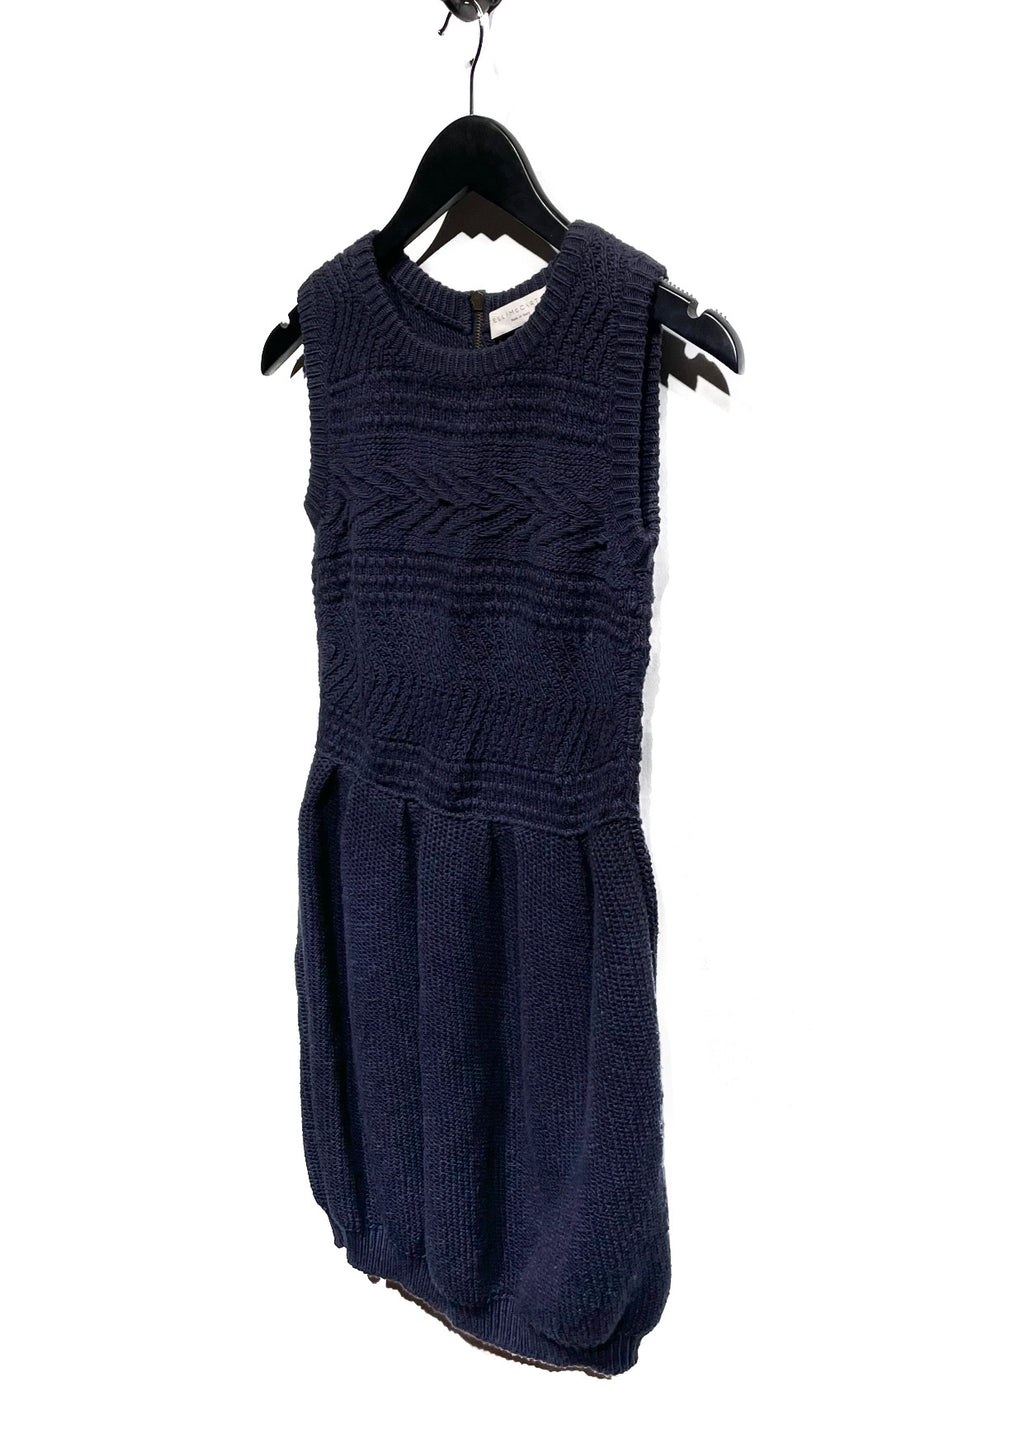 Stella McCartney Navy Knit Sleeveless Dress